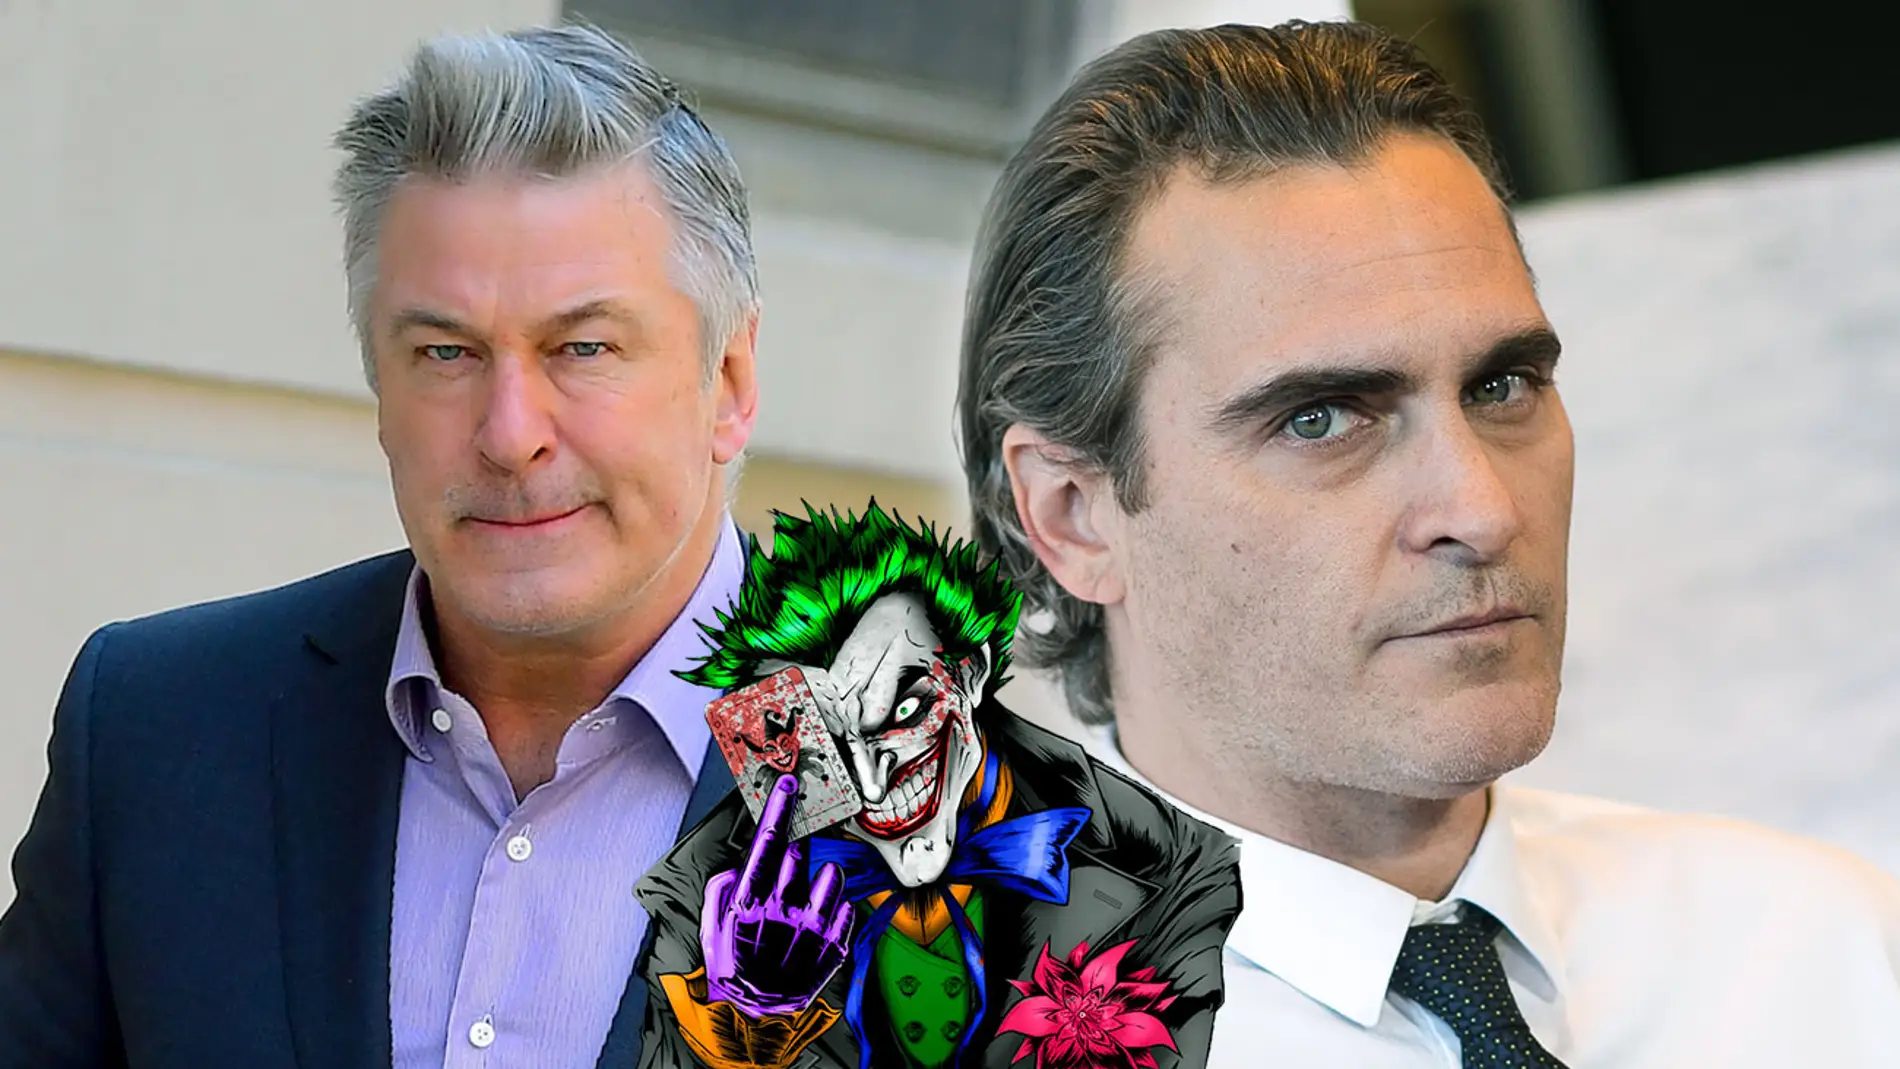 Alec Baldwin se une al Joker de Joaquin Phoenix